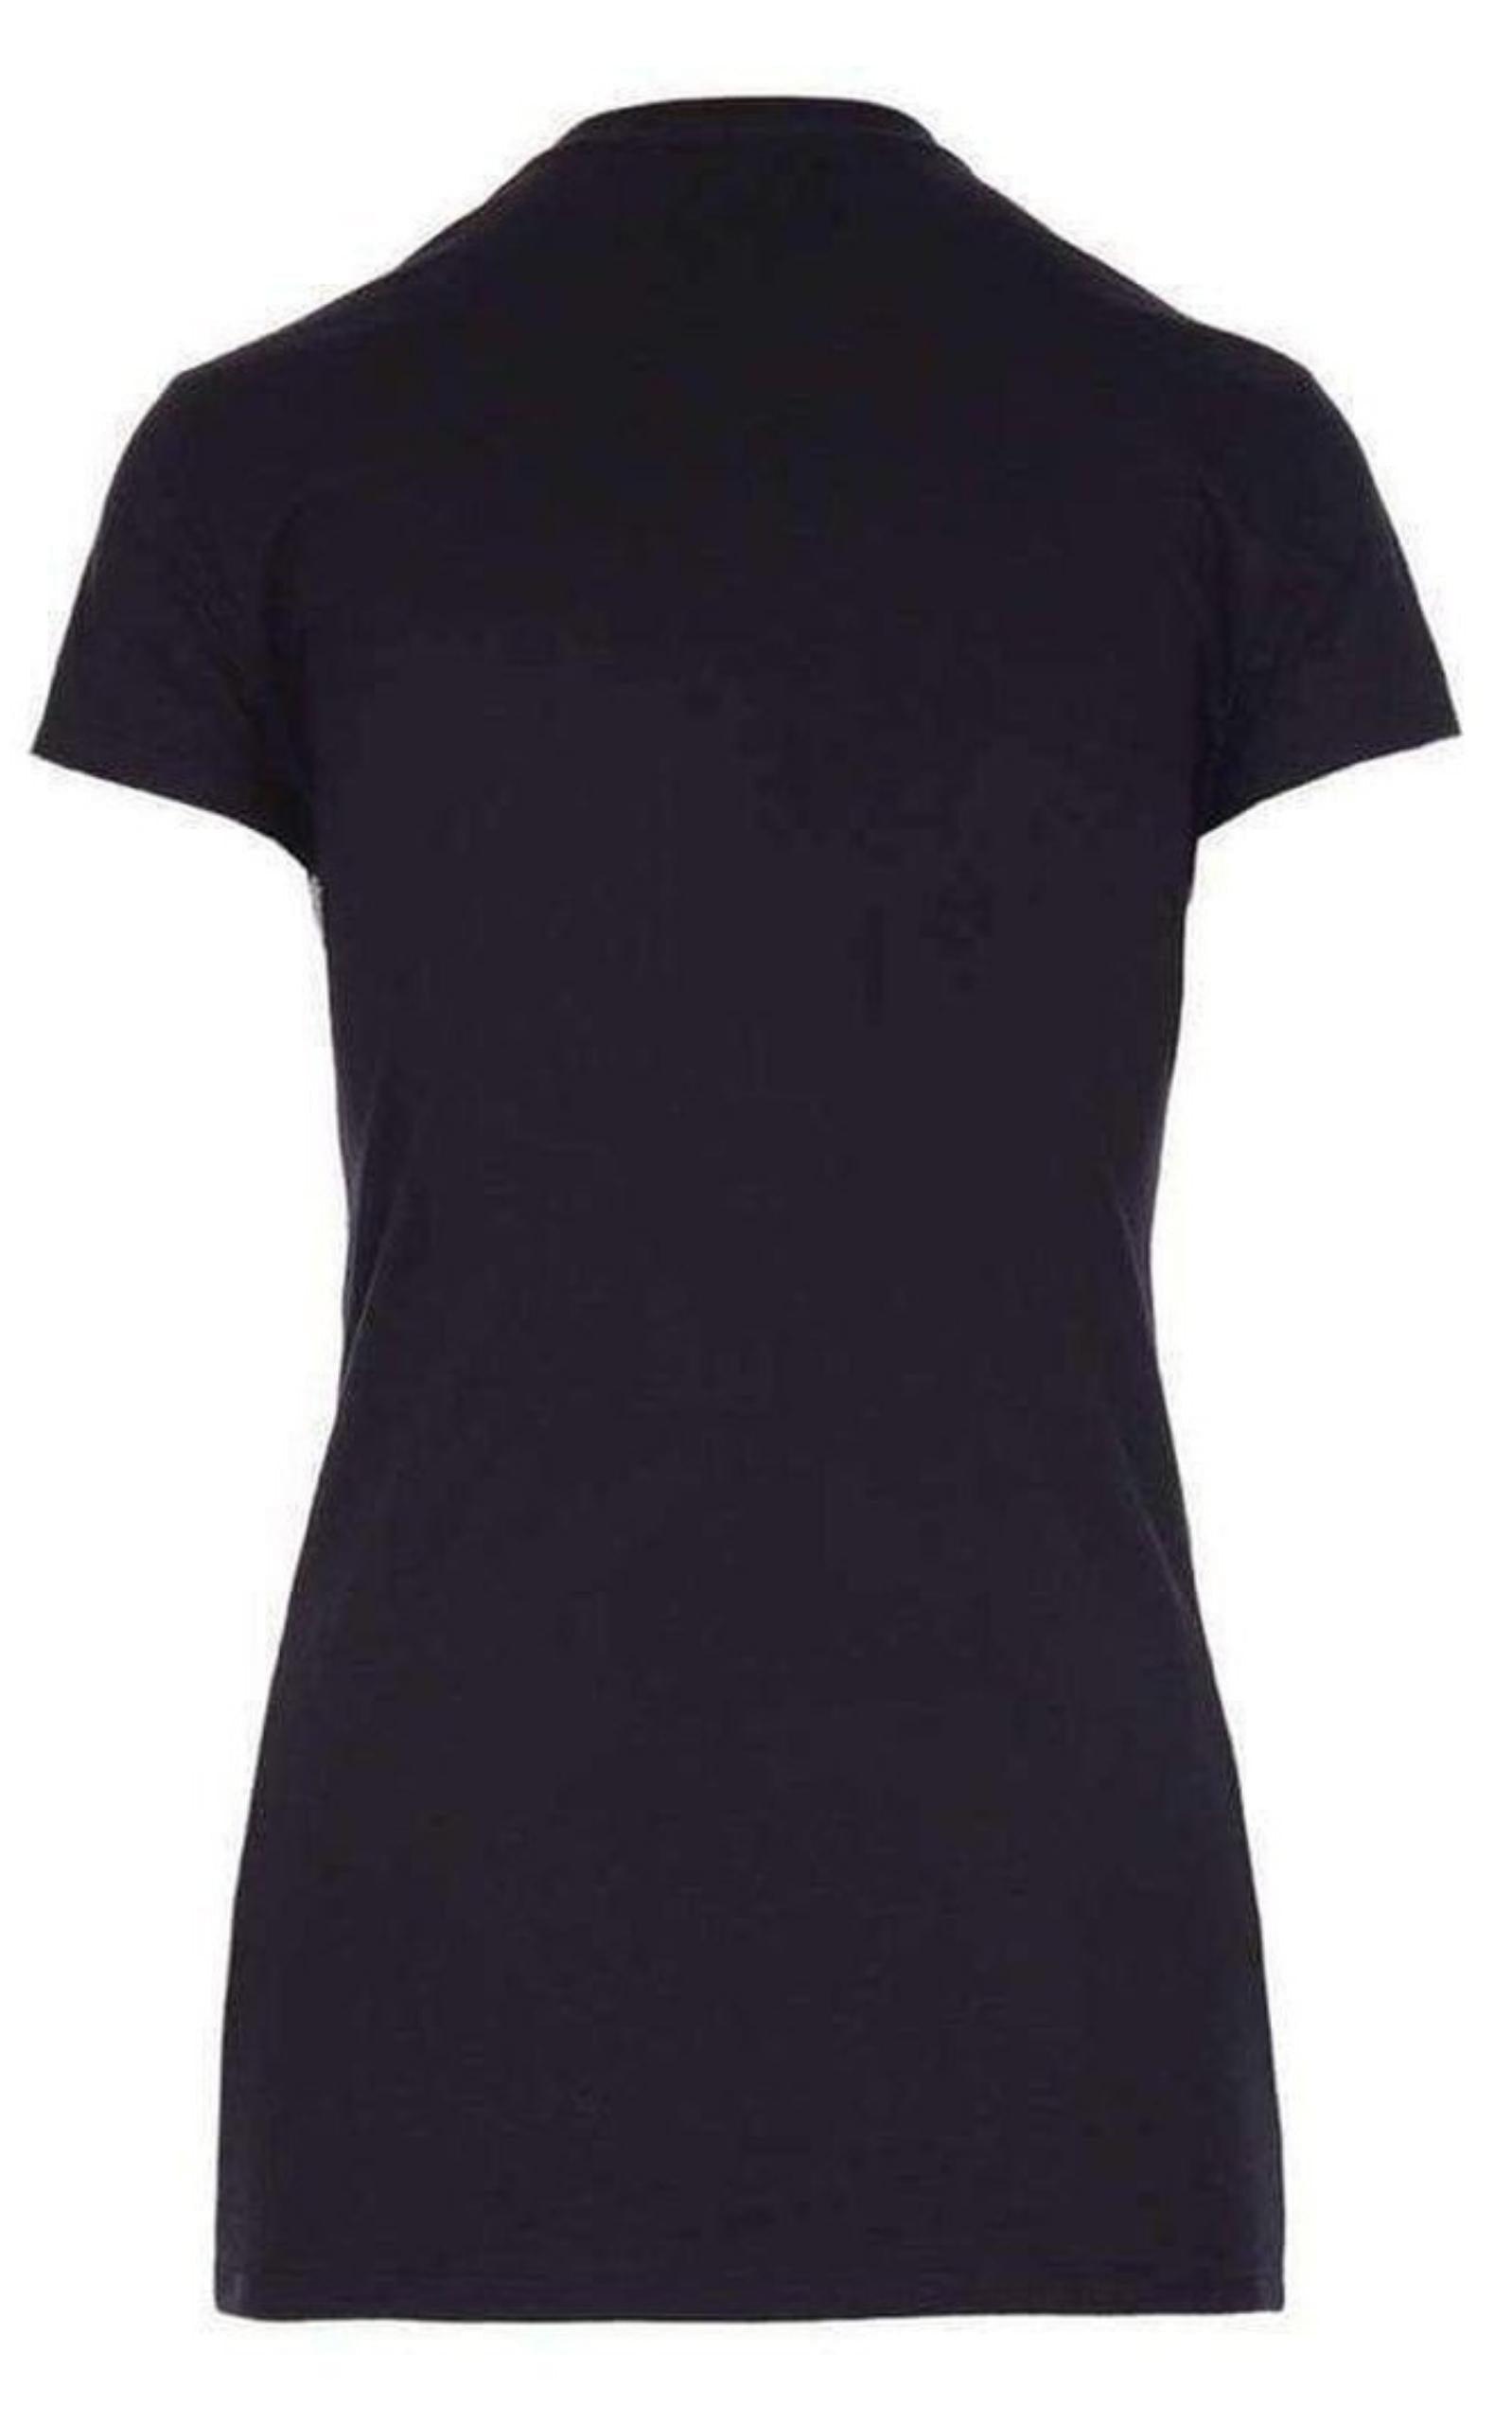  BalmainCrystal And Beads Fringe Black Cotton Shirt - Runway Catalog